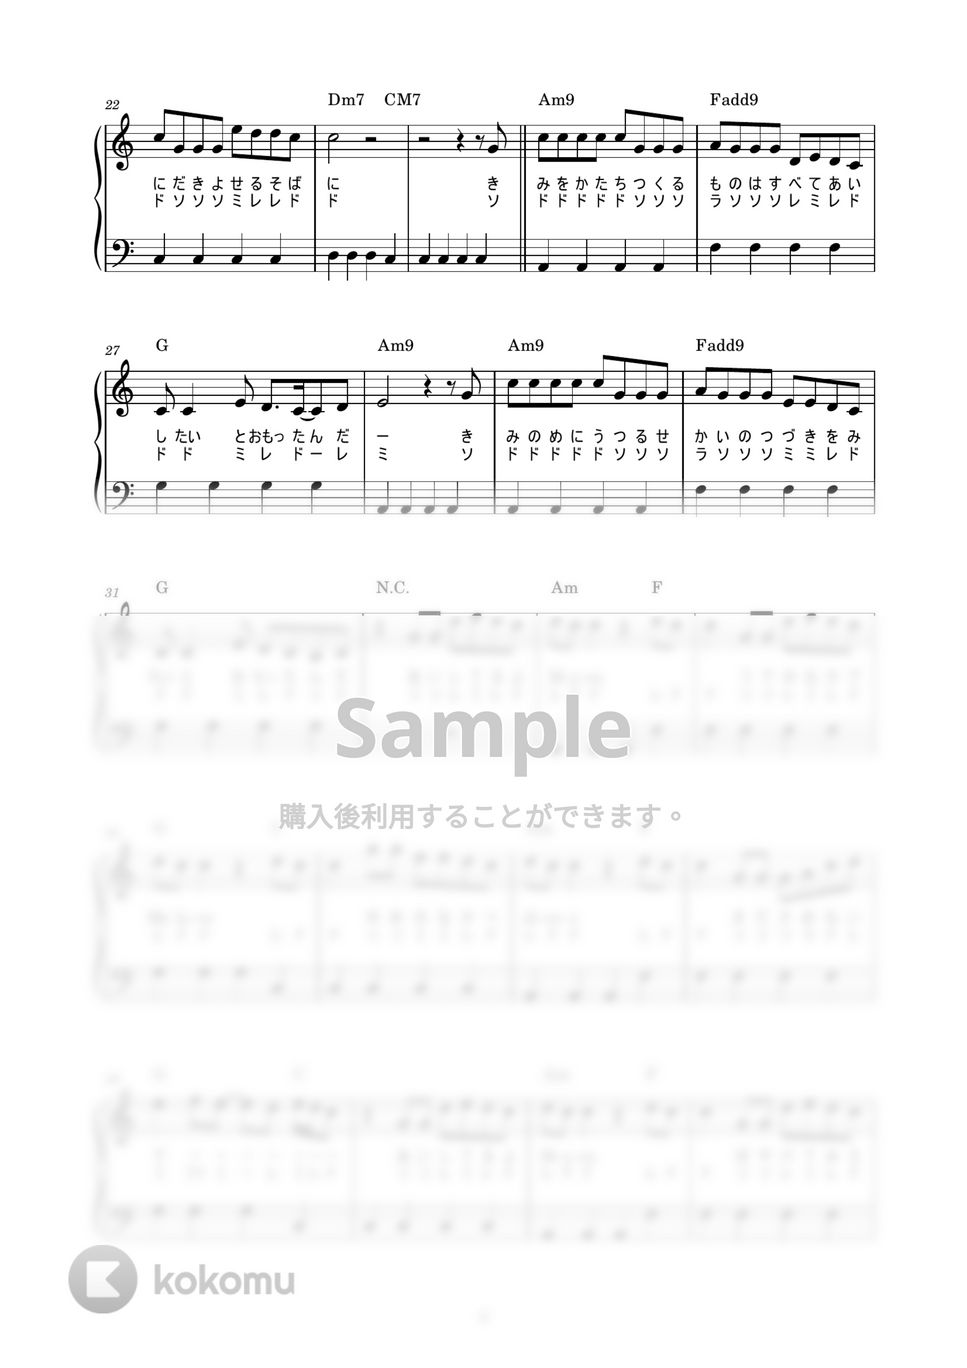 Tani Yuuki - Myra (かんたん / 歌詞付き / ドレミ付き / 初心者) by piano.tokyo